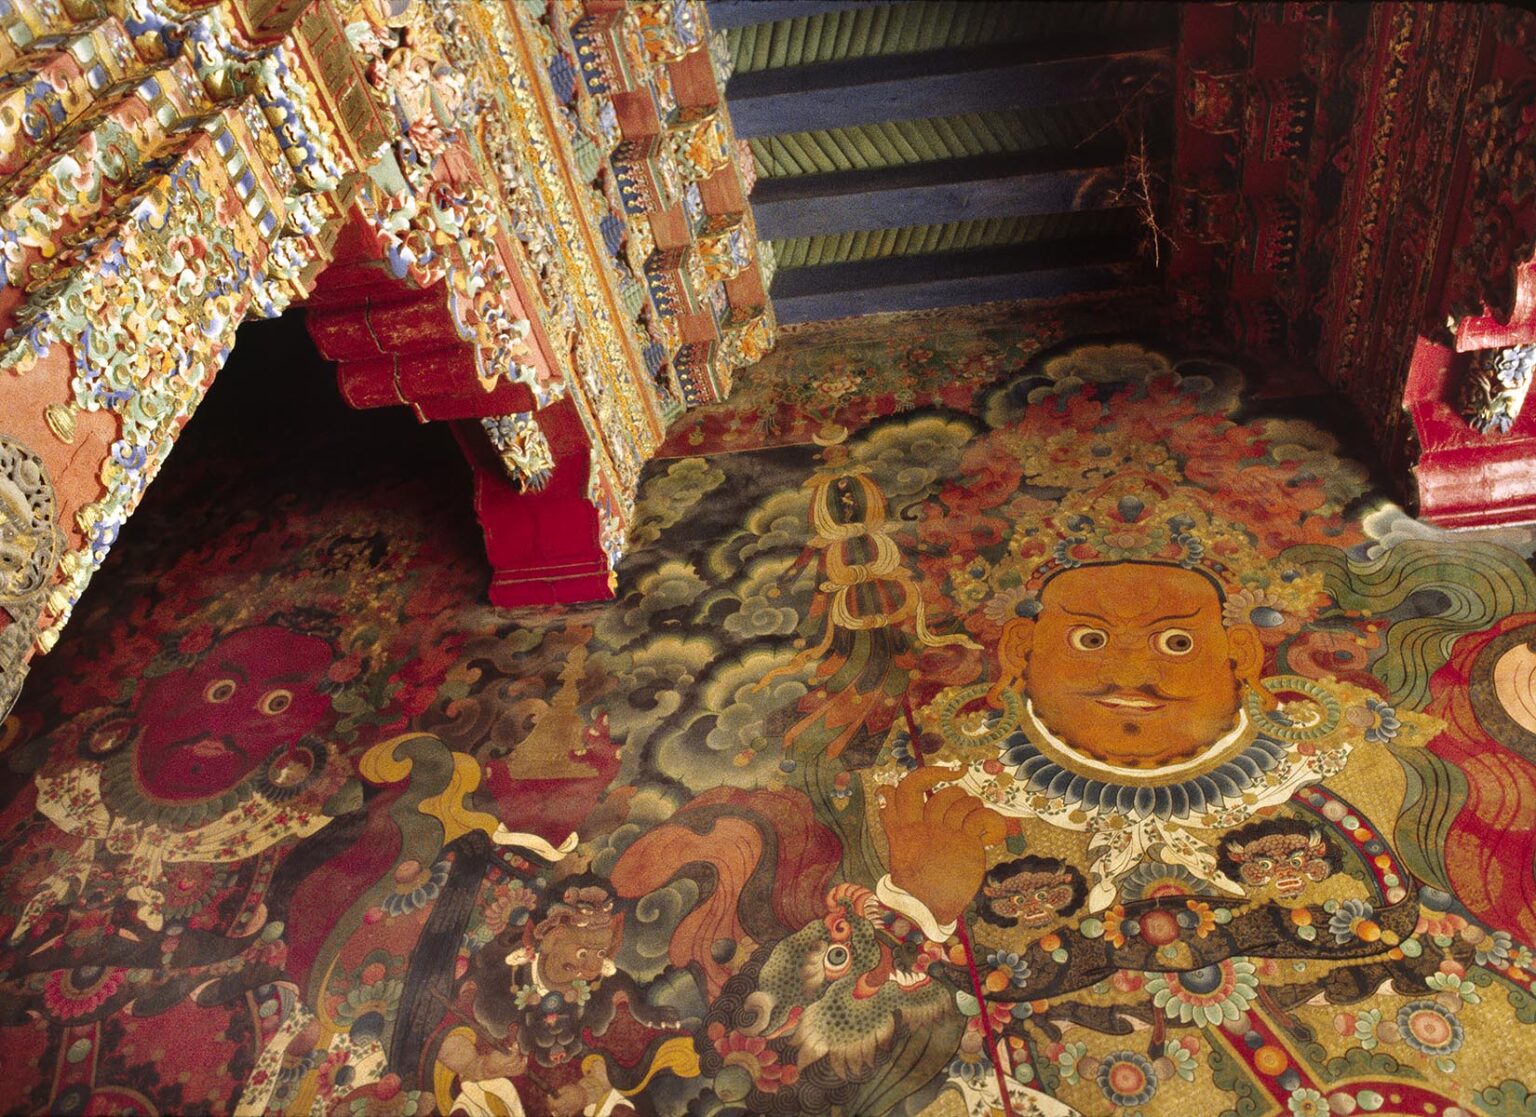 Potala Palace entrance mural of Vaisravana the gaurdian of the Northern direction - Lhasa, Tibet